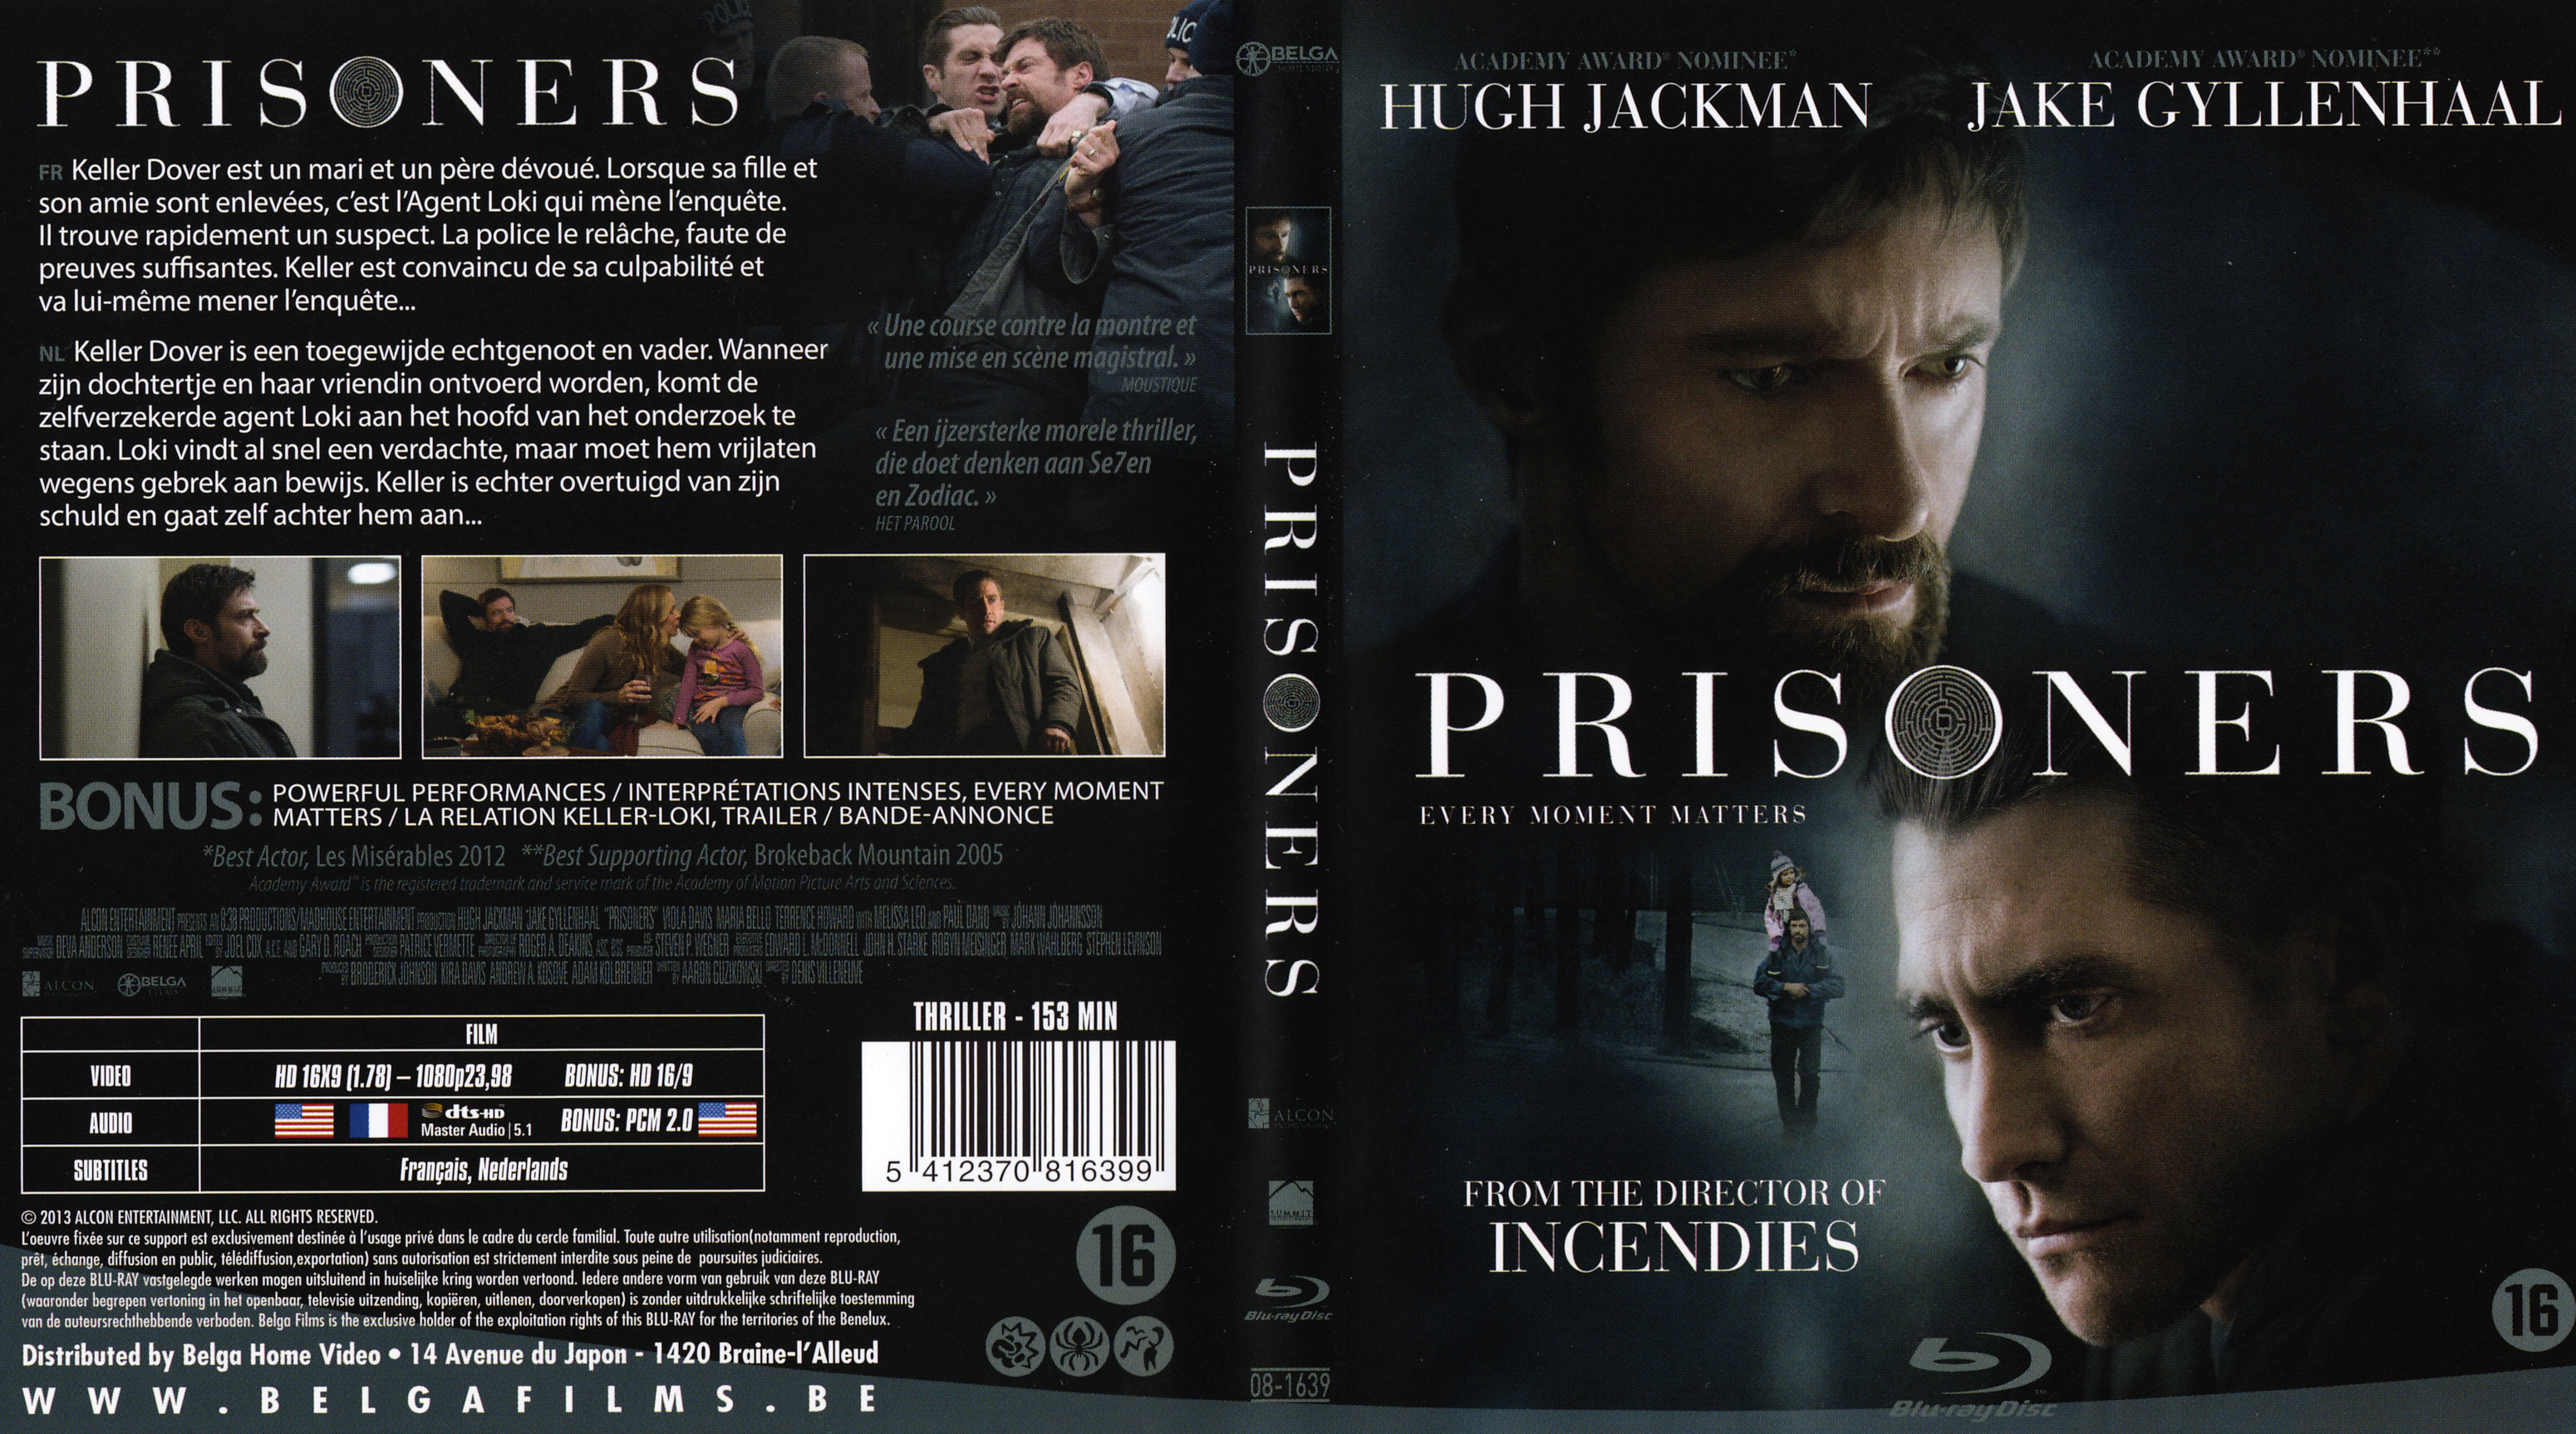 Jaquette DVD Prisoners (BLU-RAY)